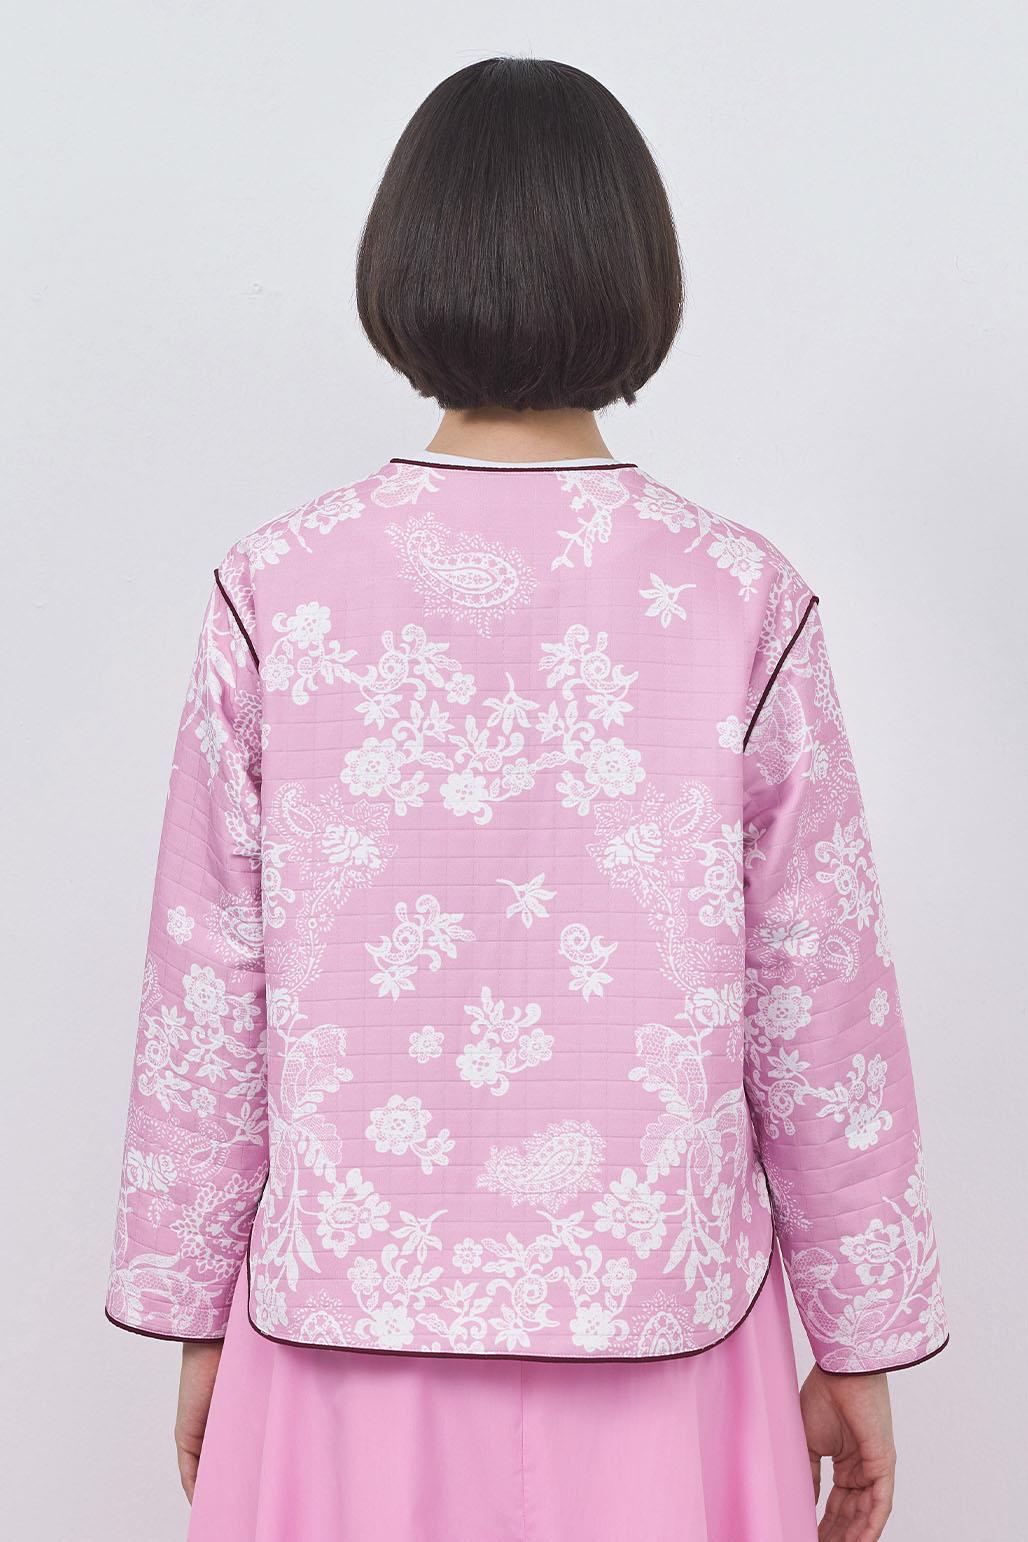 Inda Quilted Patterned Jacket Pink